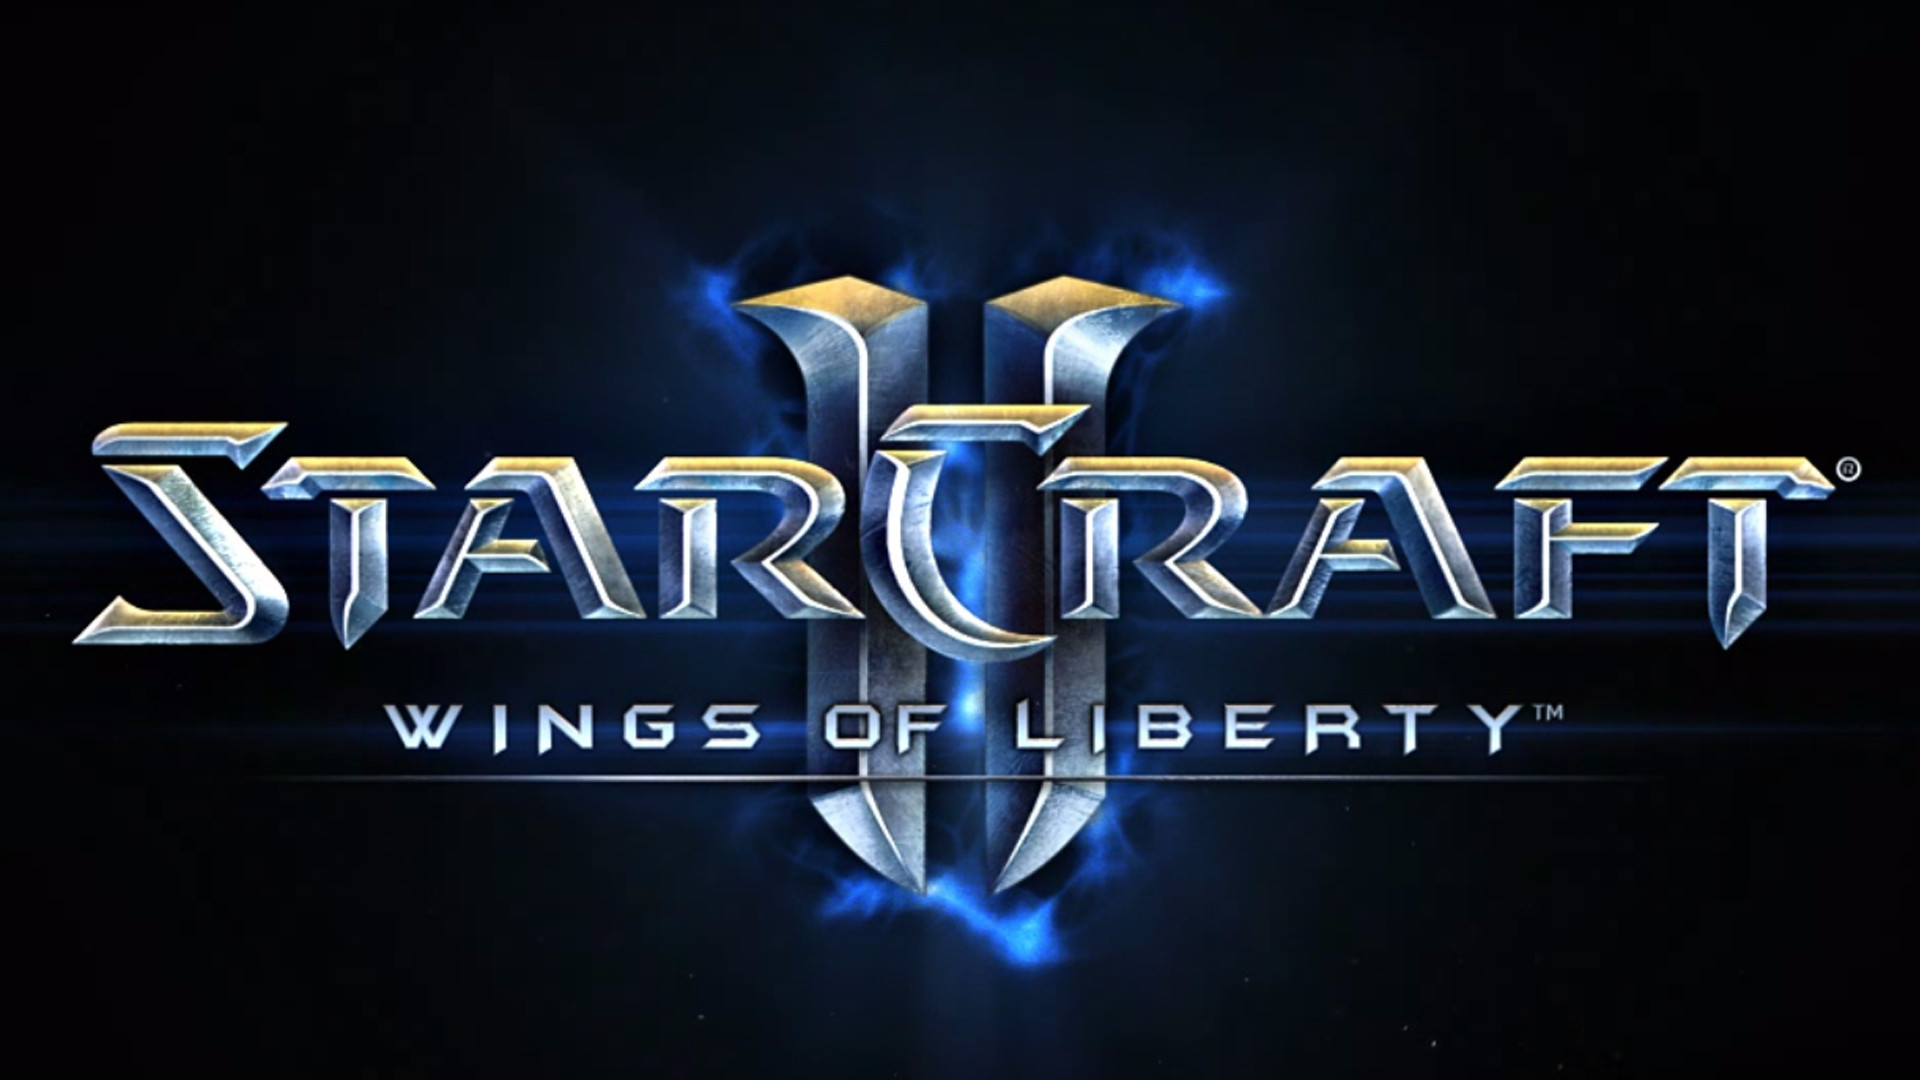 Starcraft 2 : Wings of Liberty - Brood War Aria (슬픔, 애절)